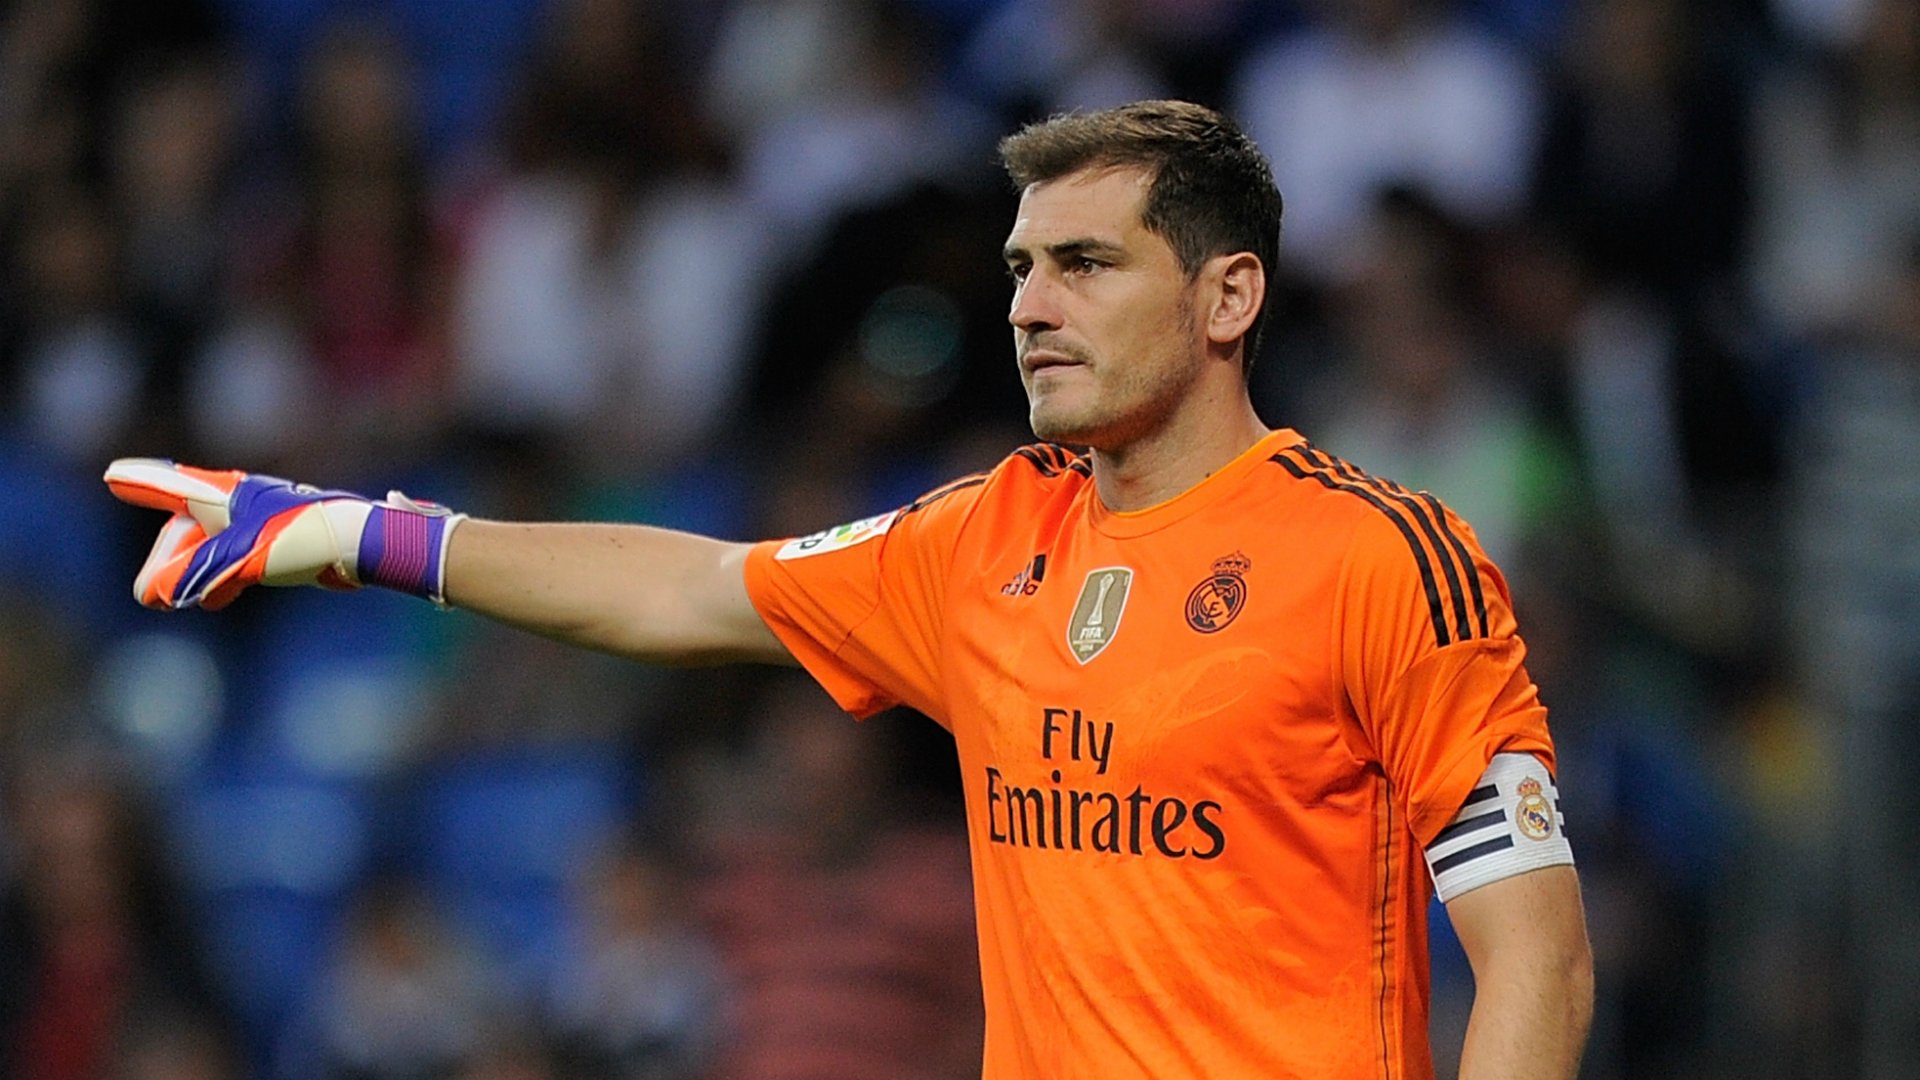  Iker Casillas revine la Real Madrid. El va fi consilier al lui Florentino Perez